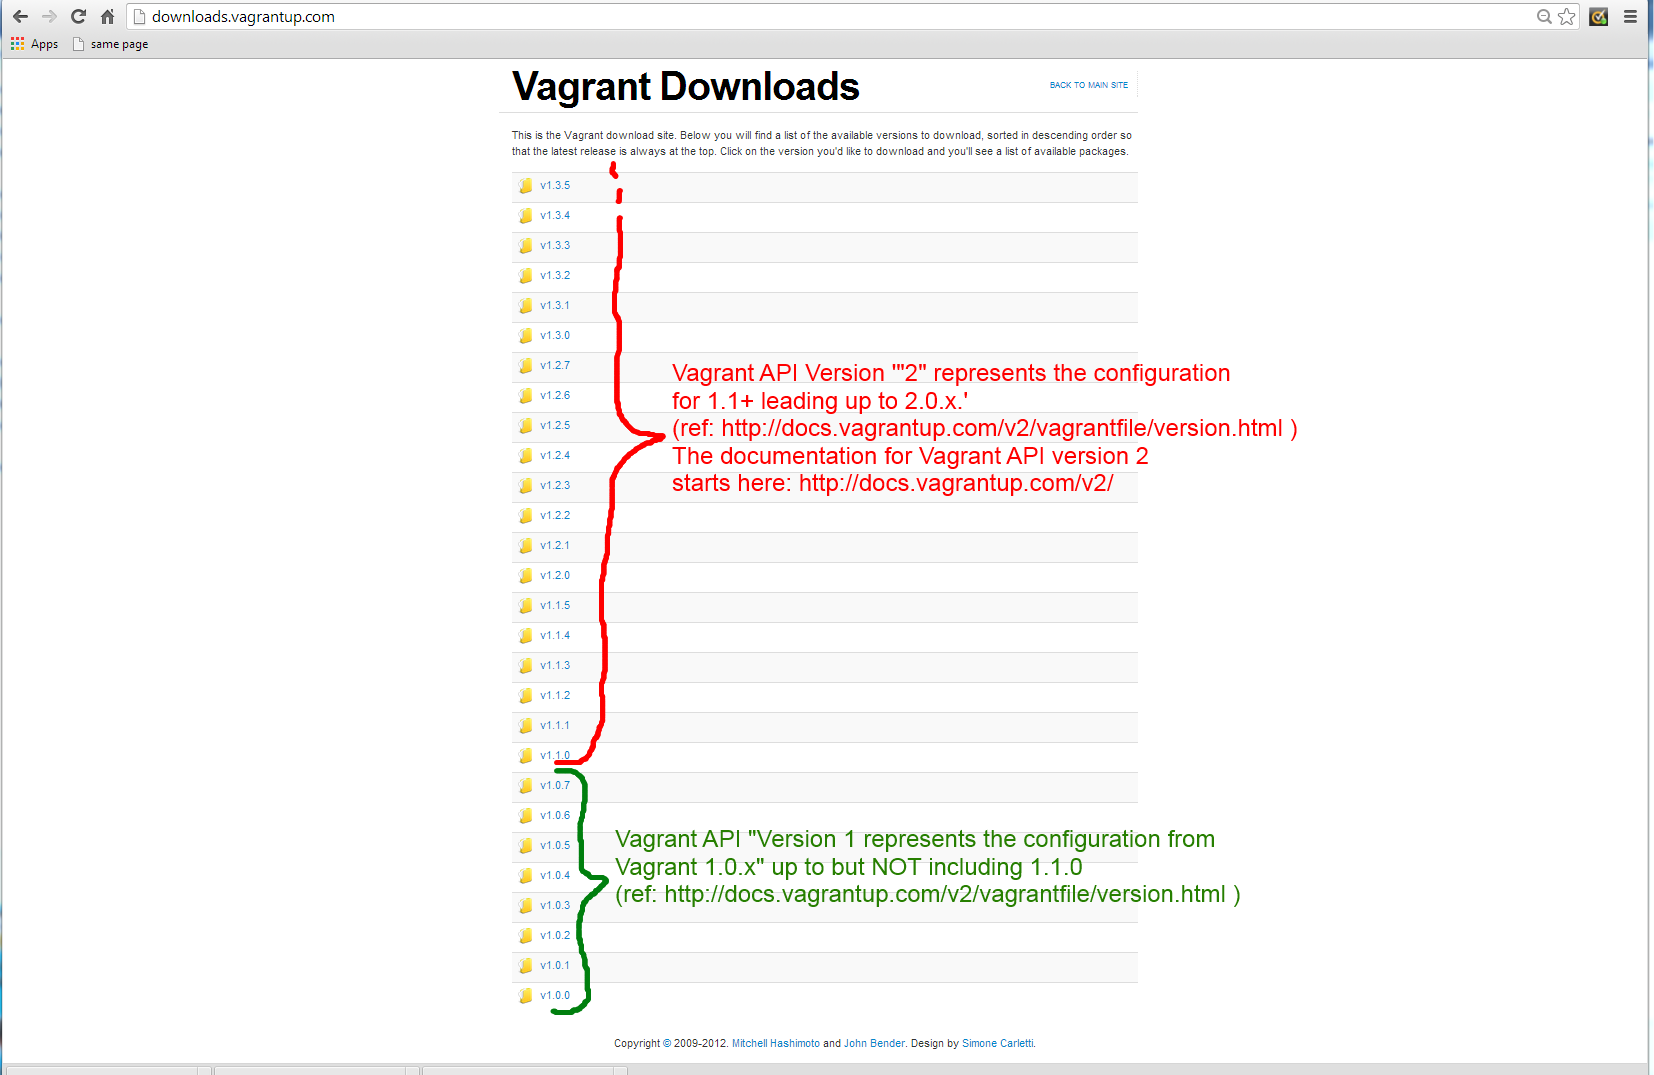 vagrant api version v1, v2 clarification and downloads